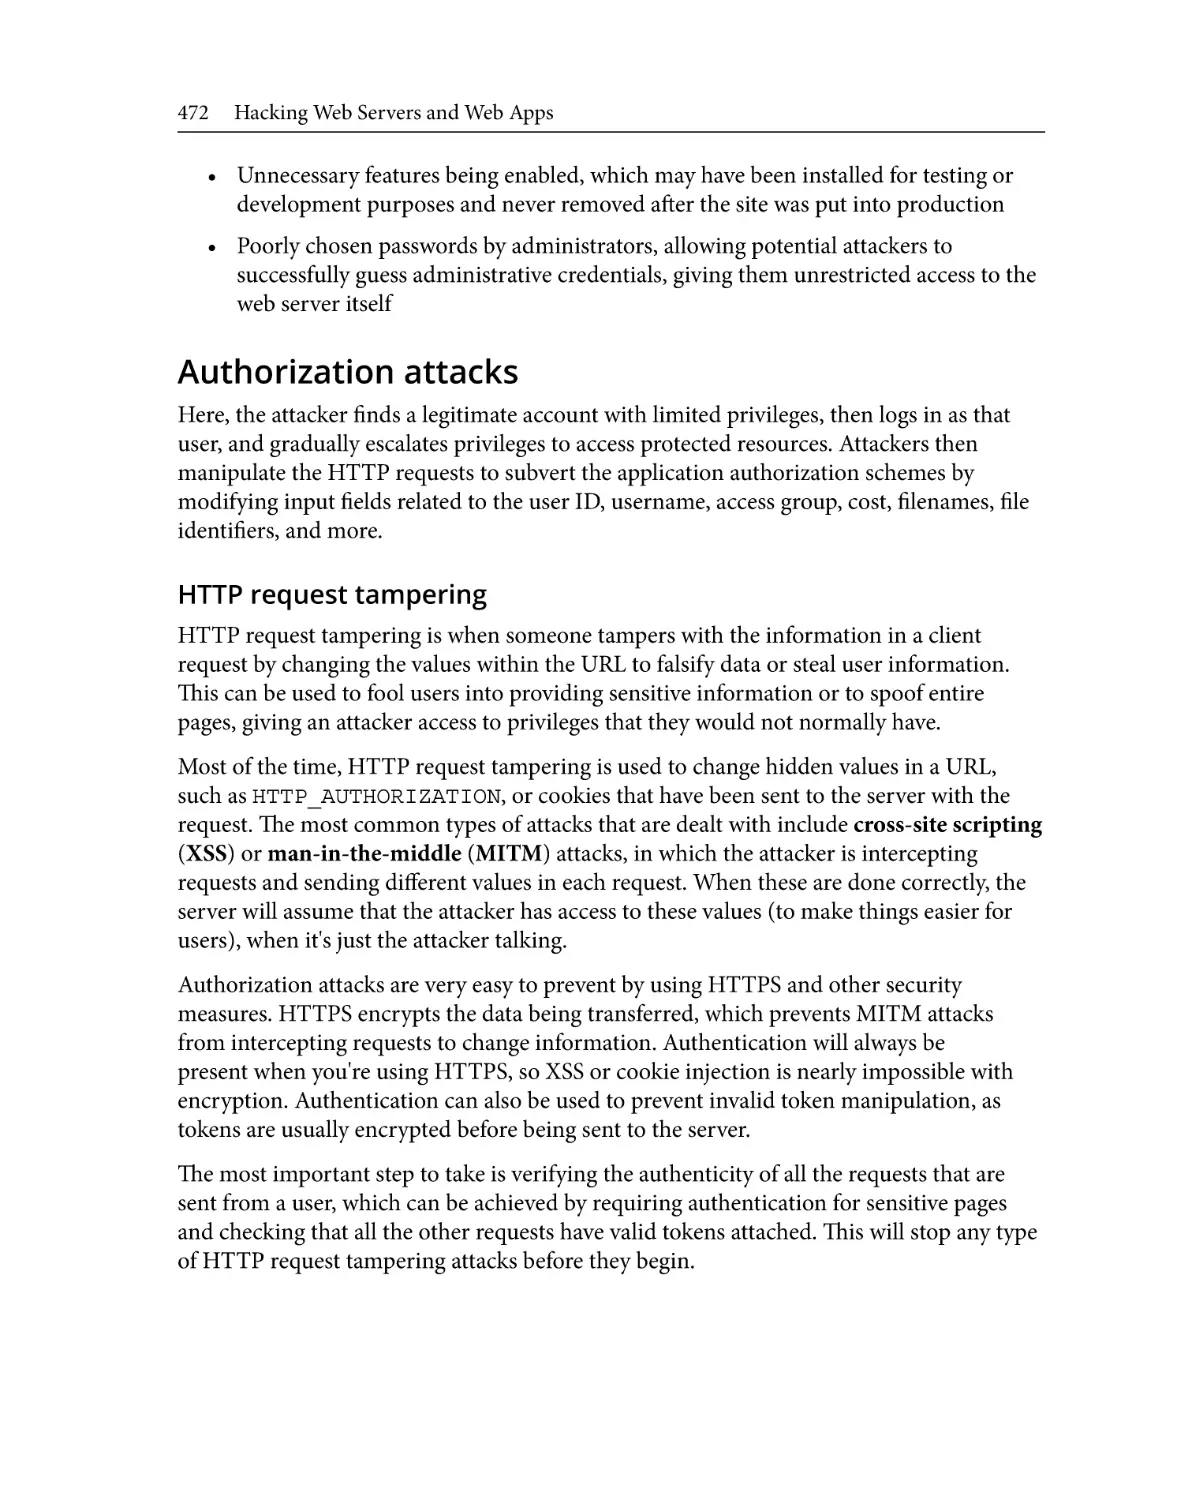 Authorization attacks